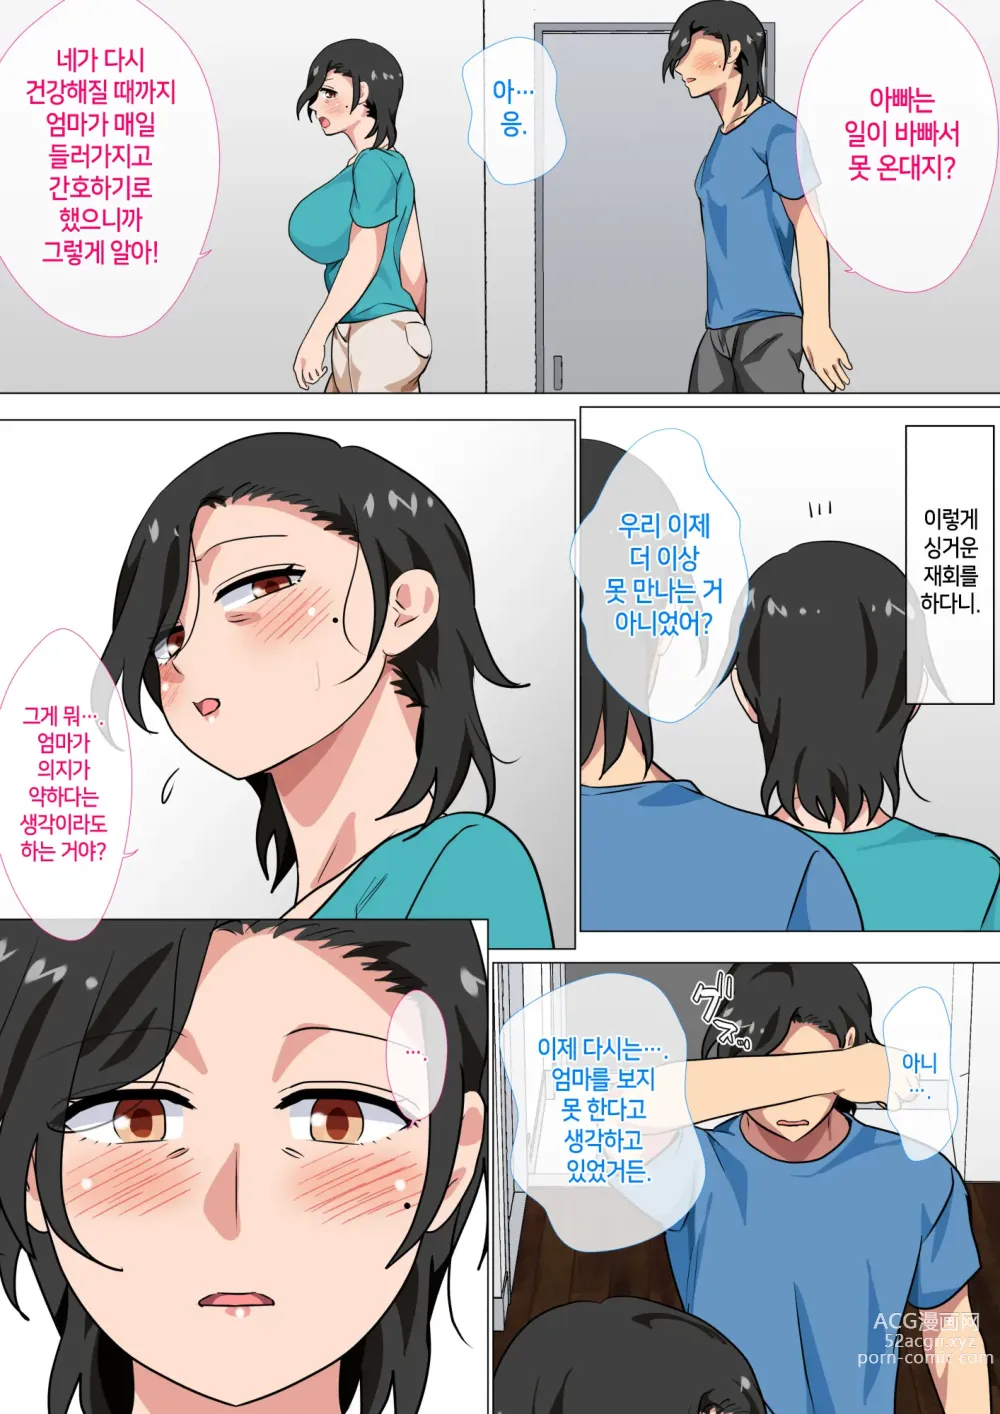 Page 9 of doujinshi 엄마에게 고백했더니 단 하루만 색스를 하게 해준 이야기 2